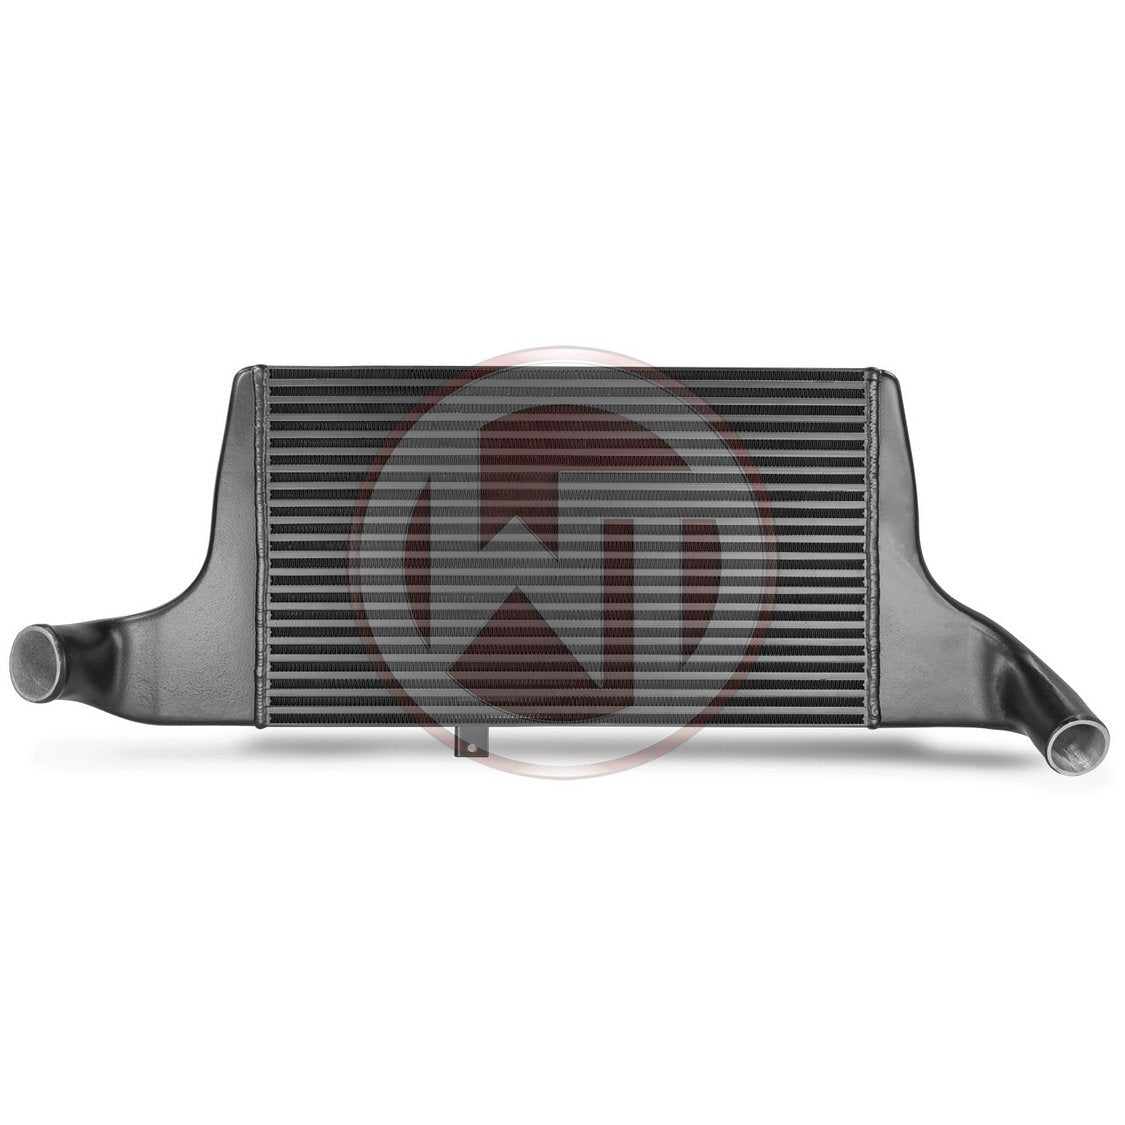 WAGNER TUNING -
Performance Ladeluftkühler Kit Audi S3 8L